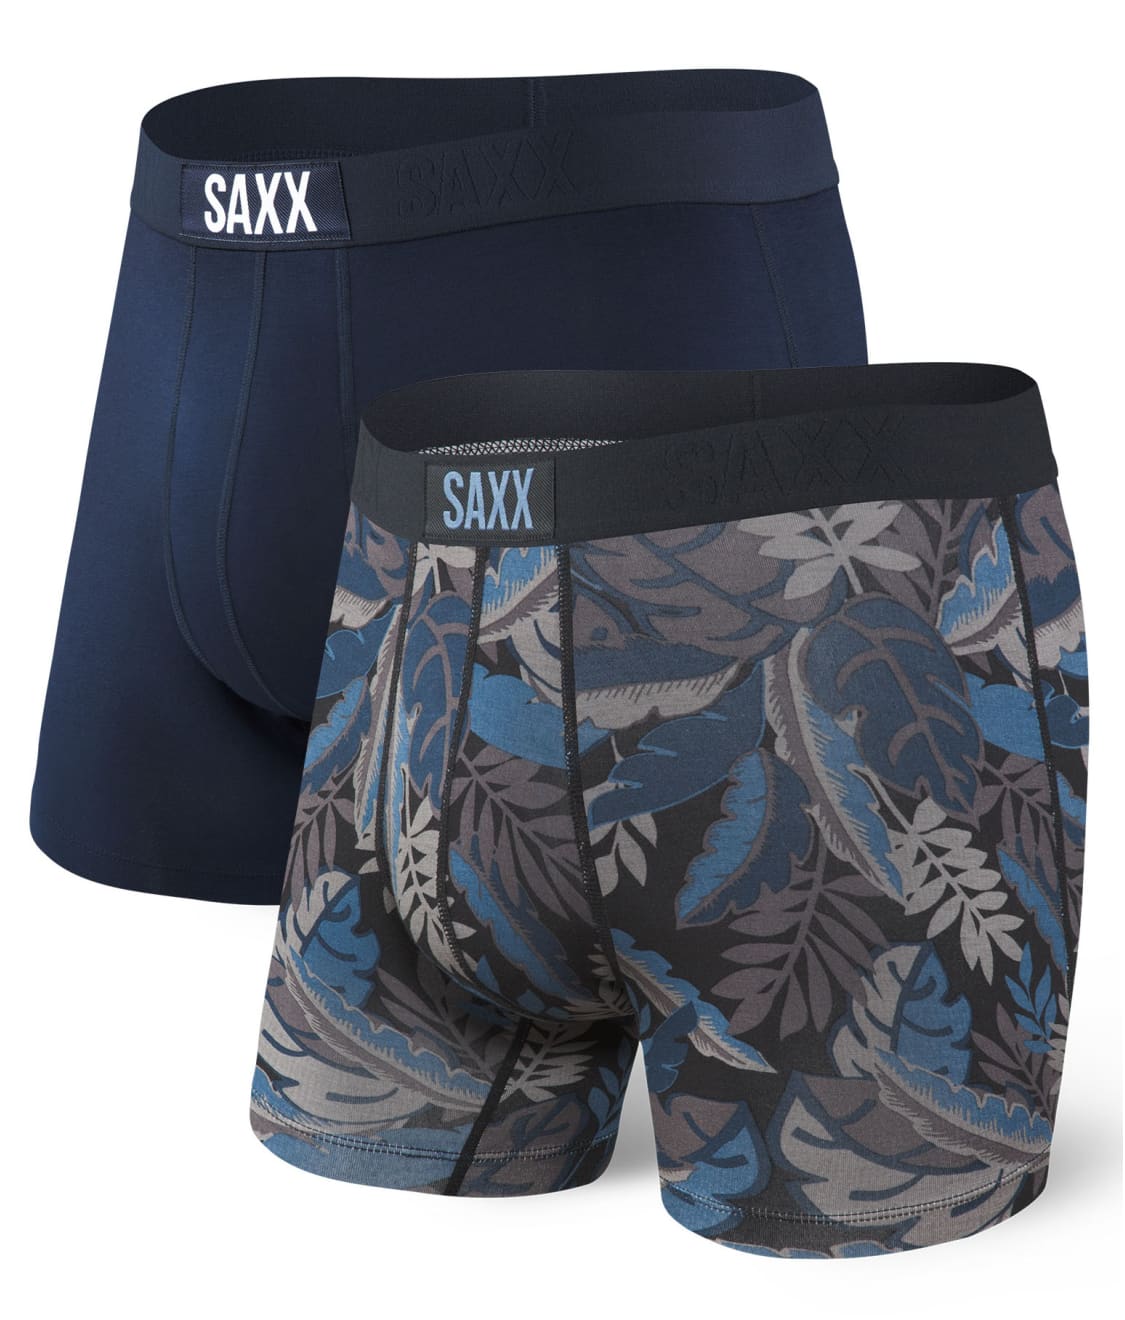 SAXX Vibe Boxer Brief 2-Pack & Reviews